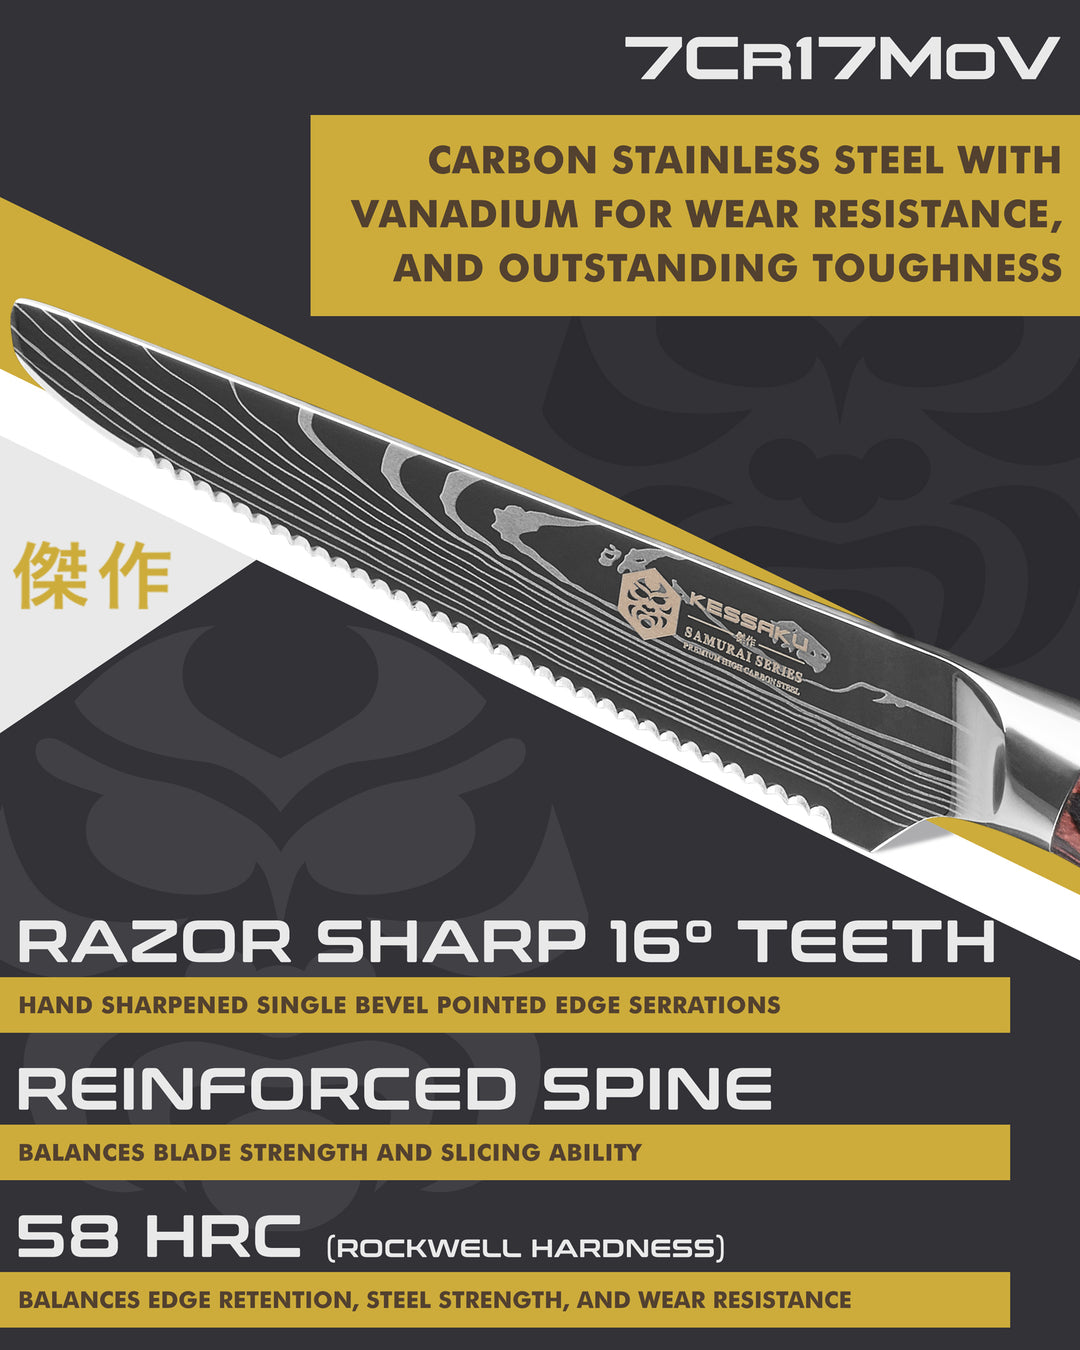 Kessaku Samurai Steak Knife blade features: 7Cr17MoV steel, 58 HRC, 16 degree edge, reinforced spine